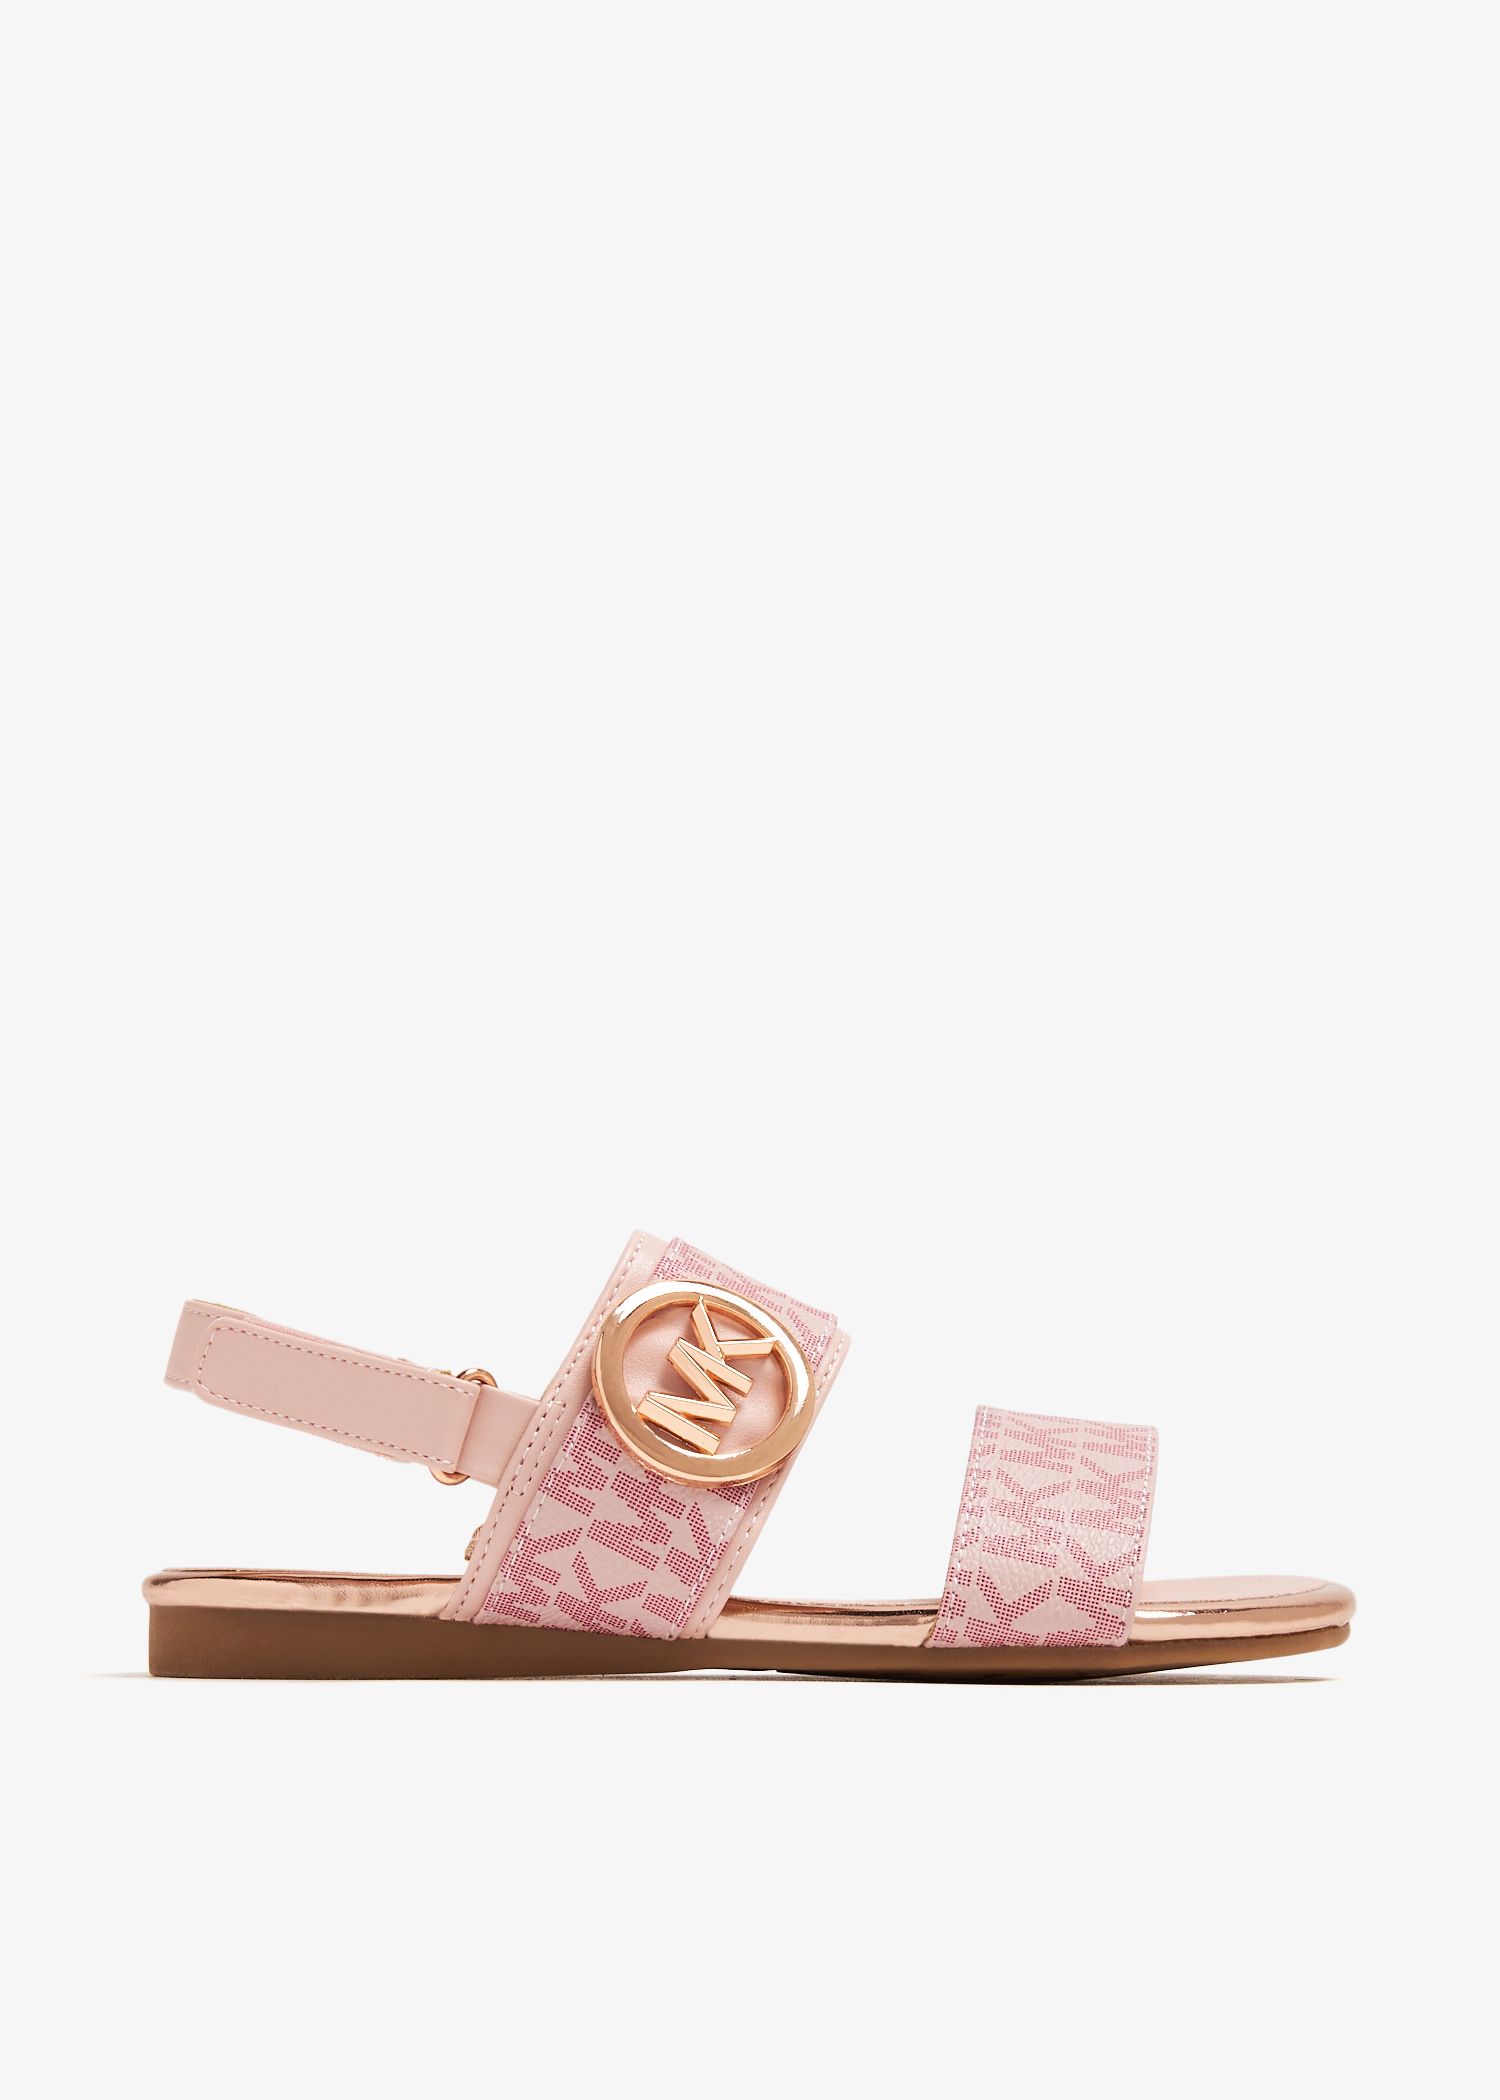 Michael Kors Sydney Kenzie 2 sandals for Girl - Pink in UAE 